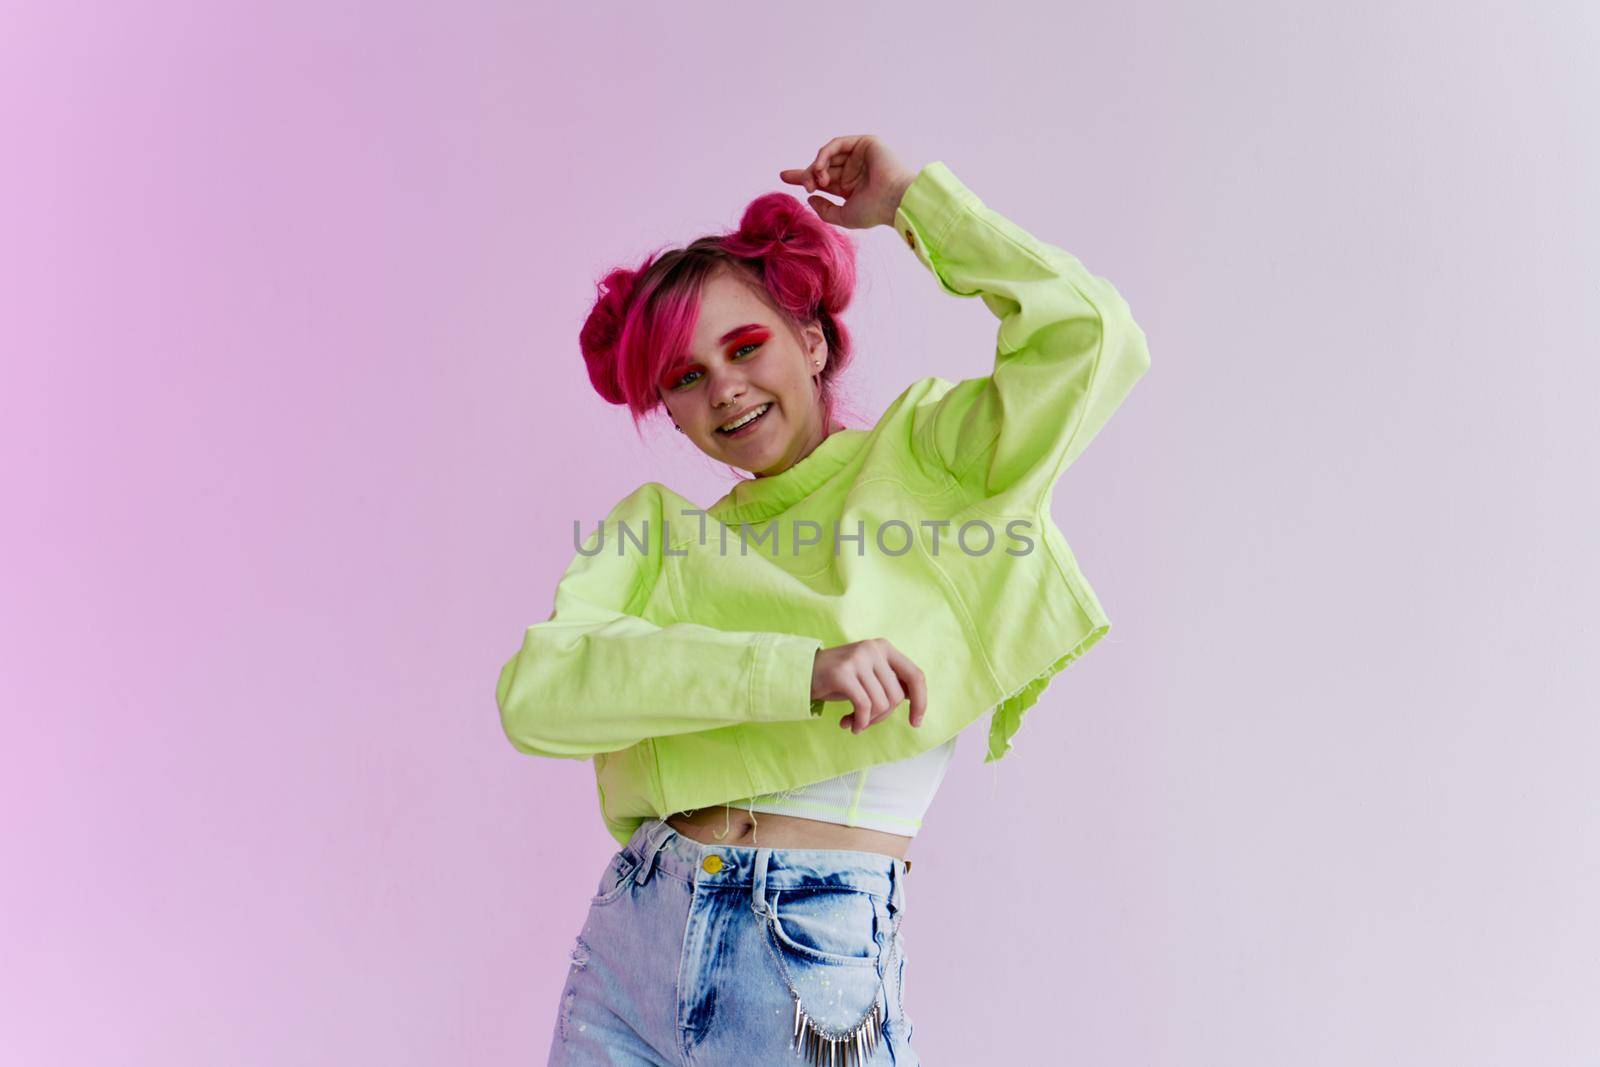 pretty woman bright makeup posing poster stylish clothing Acid style design by Vichizh